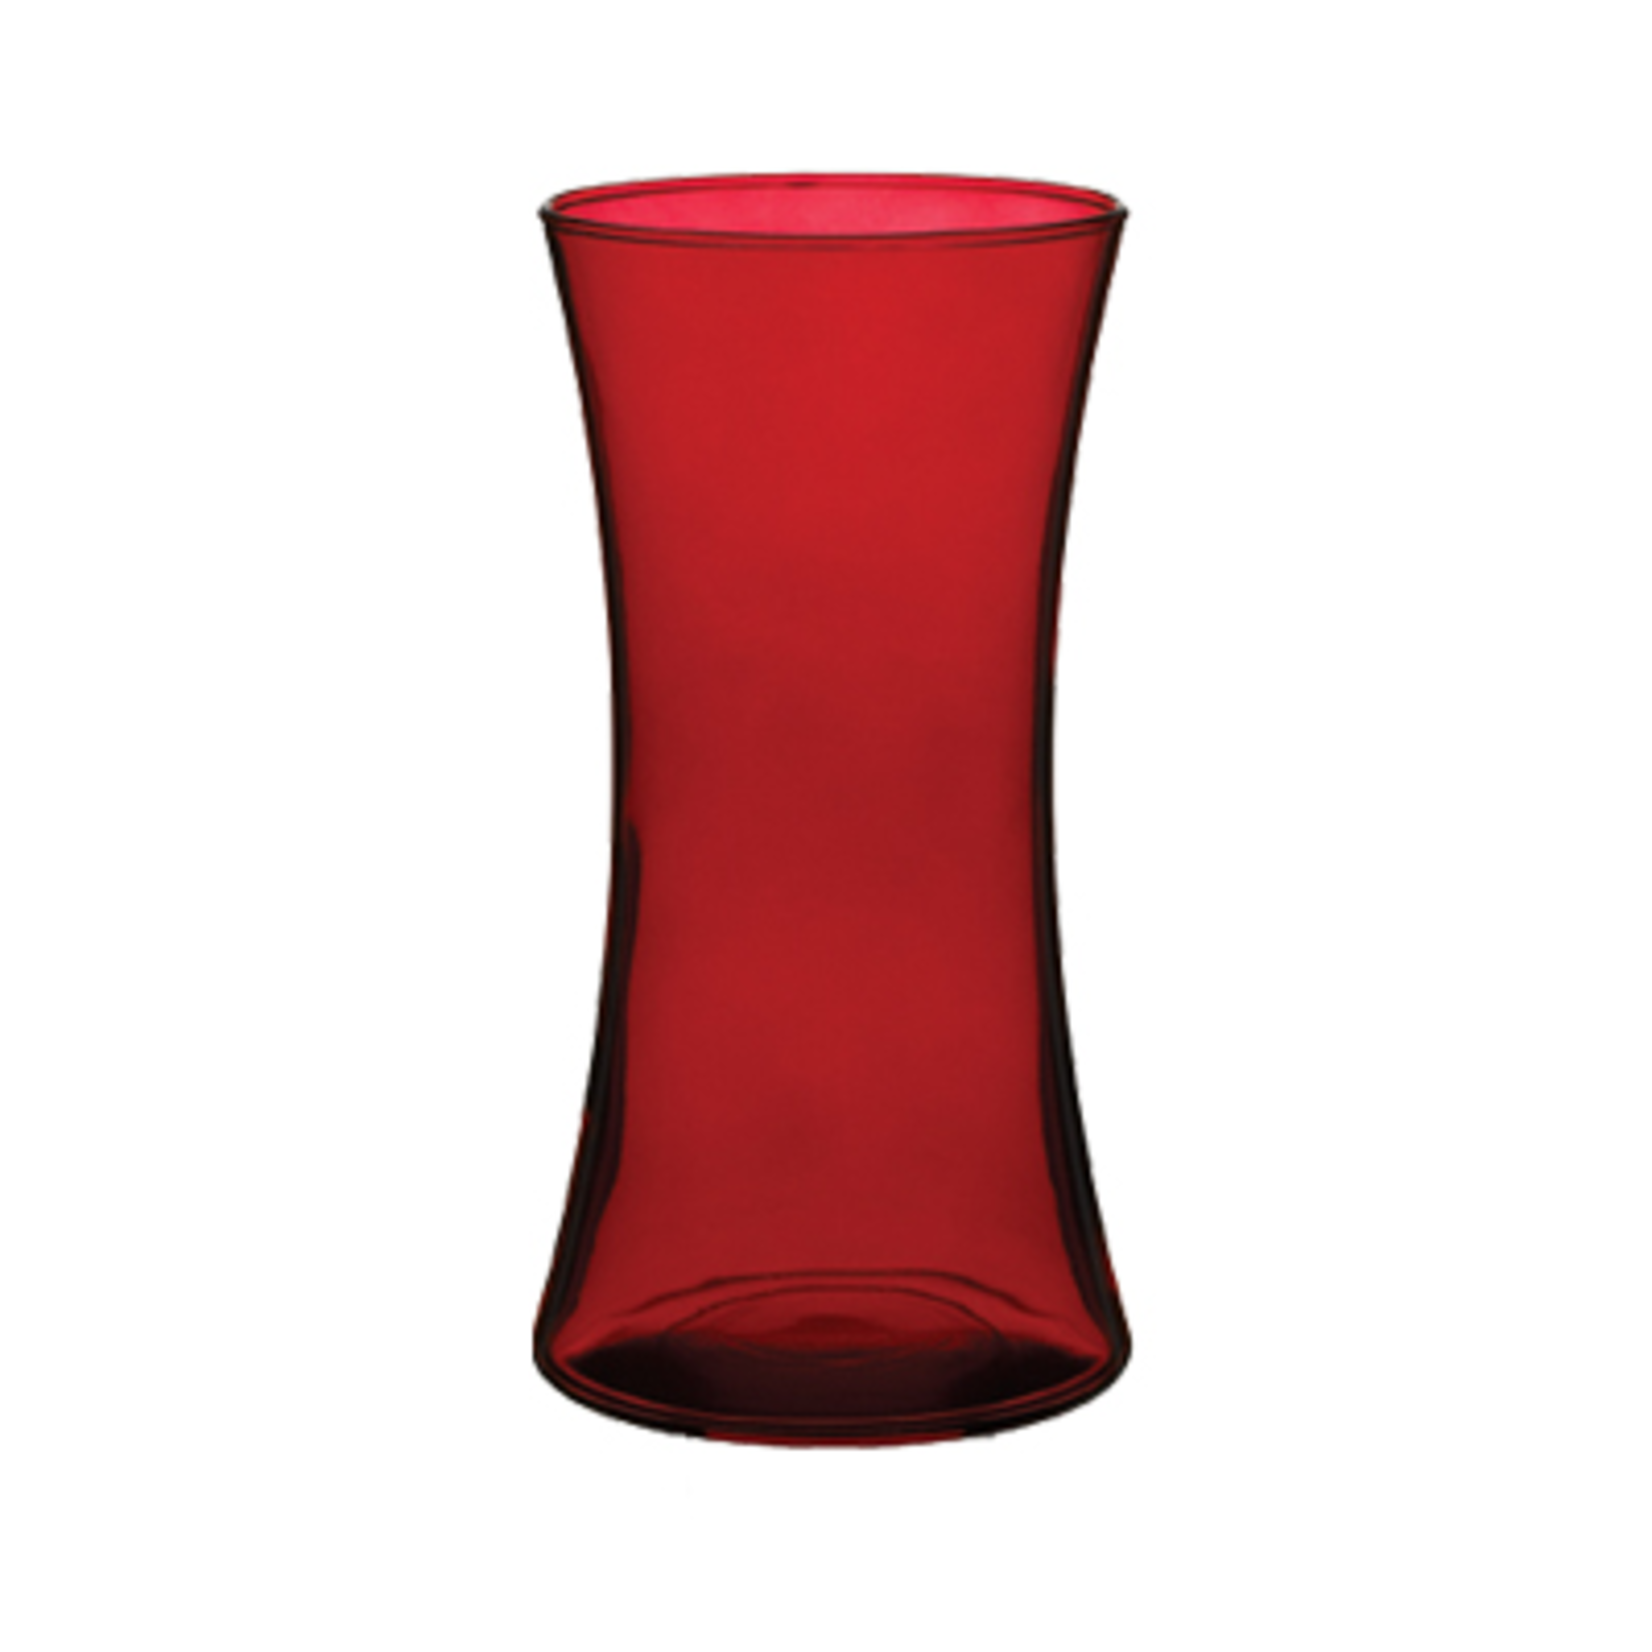 8"h x 4.75" Red Gathering Vase - Ruby